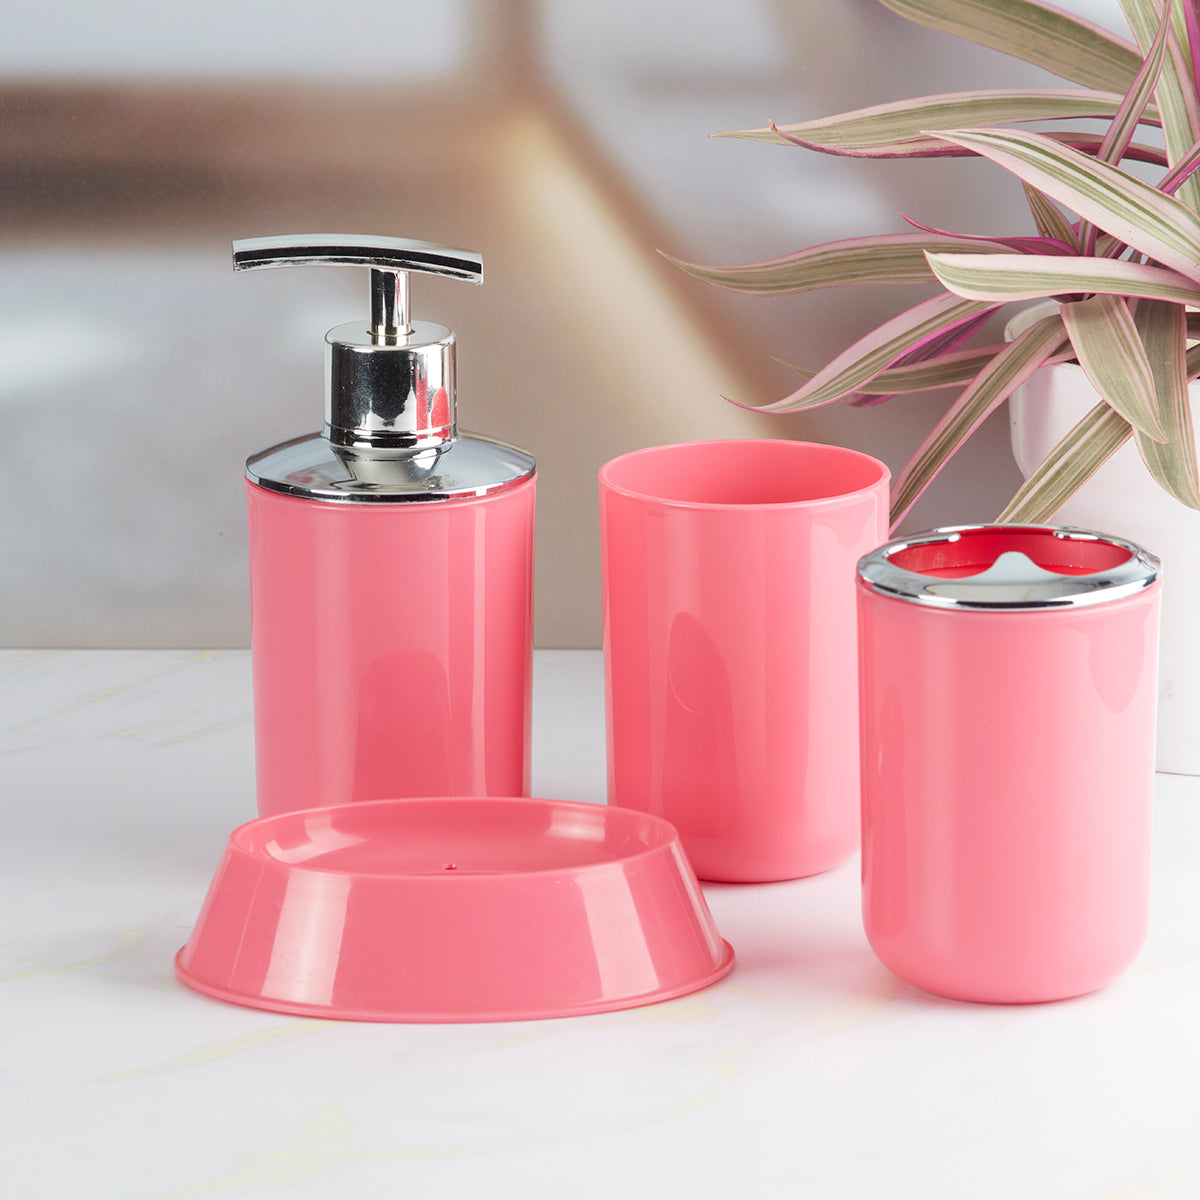 Acrylic Bathroom Accessories Set of 4 Bath Set with Soap Dispenser (7397)